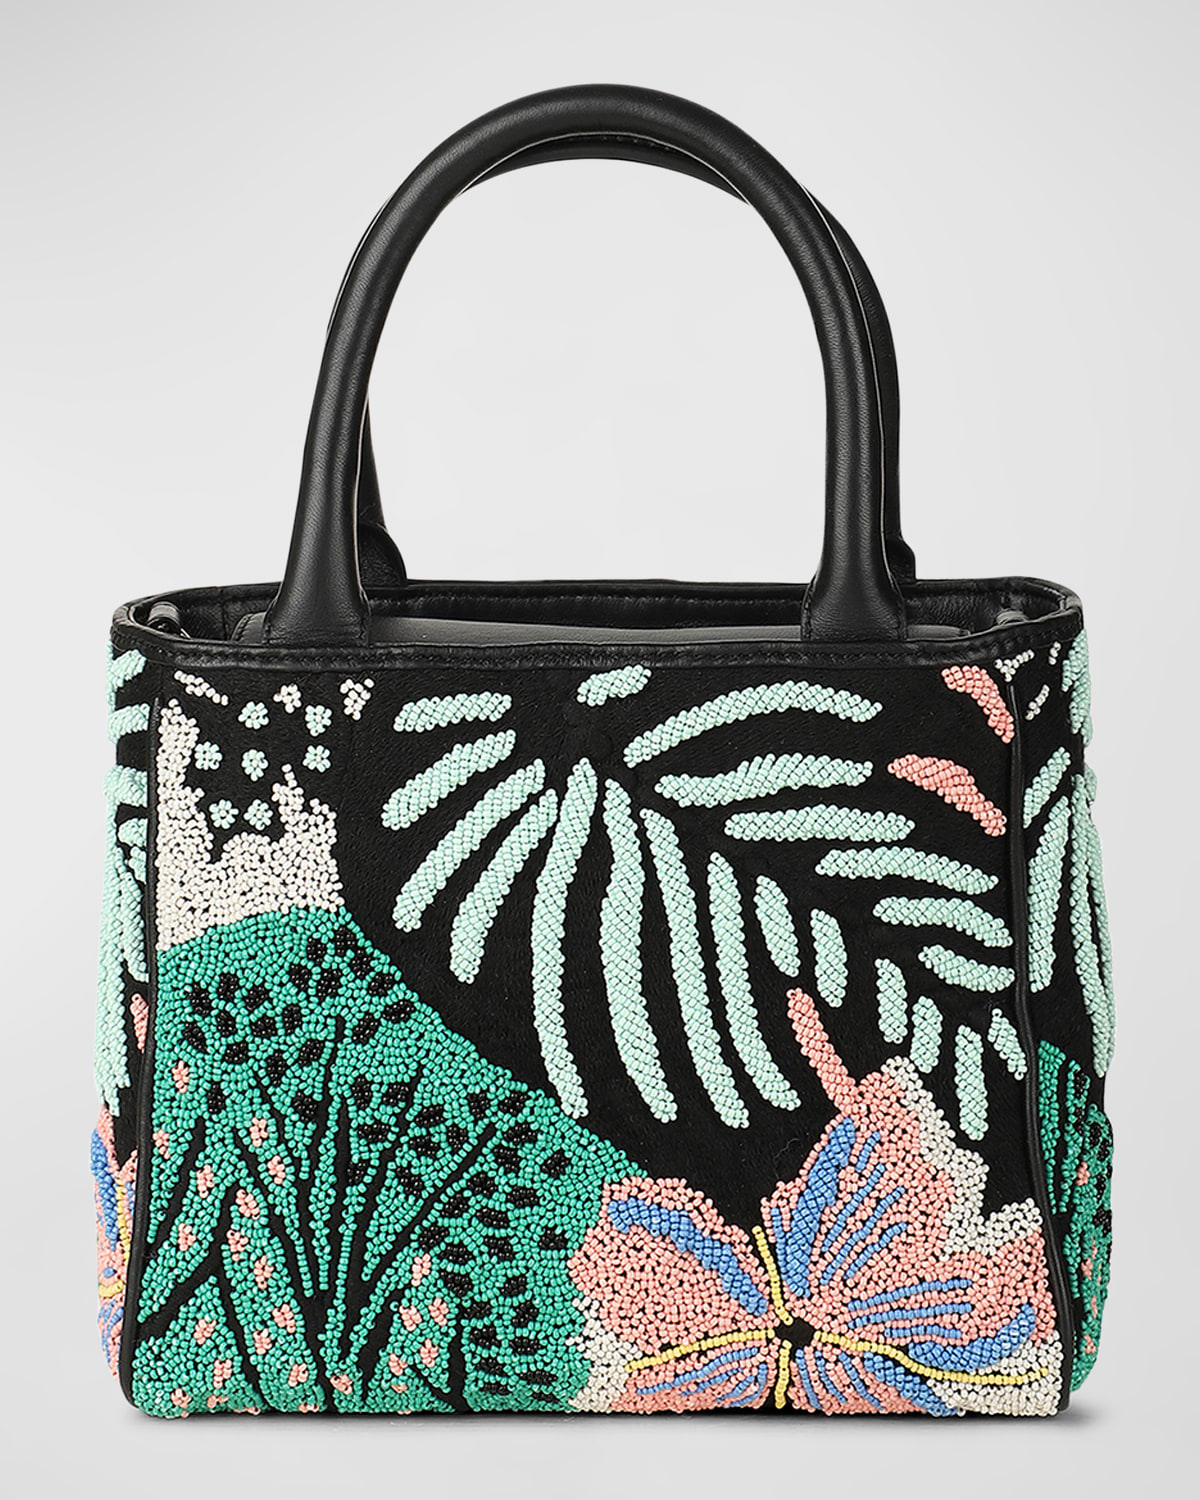 Tasha Small Floral Beaded Tote Bag